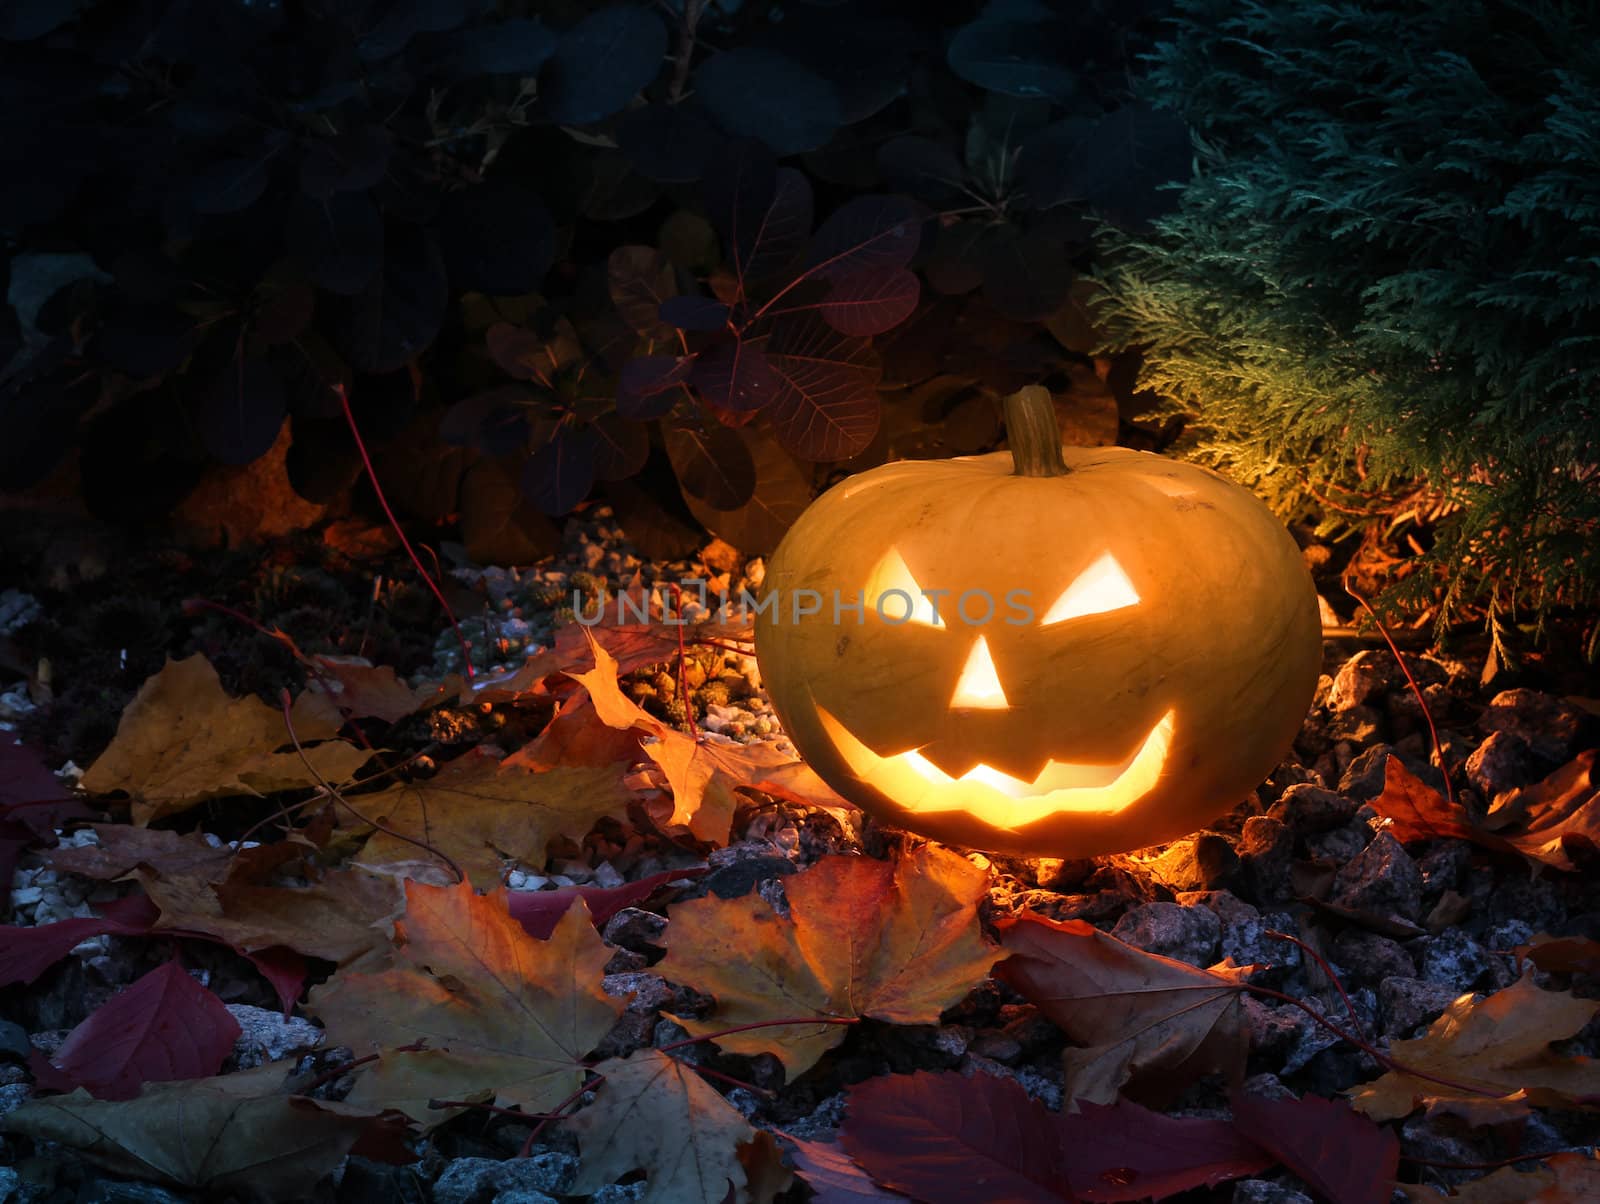 Halloween pumpkin candle light in colorful autumn garden